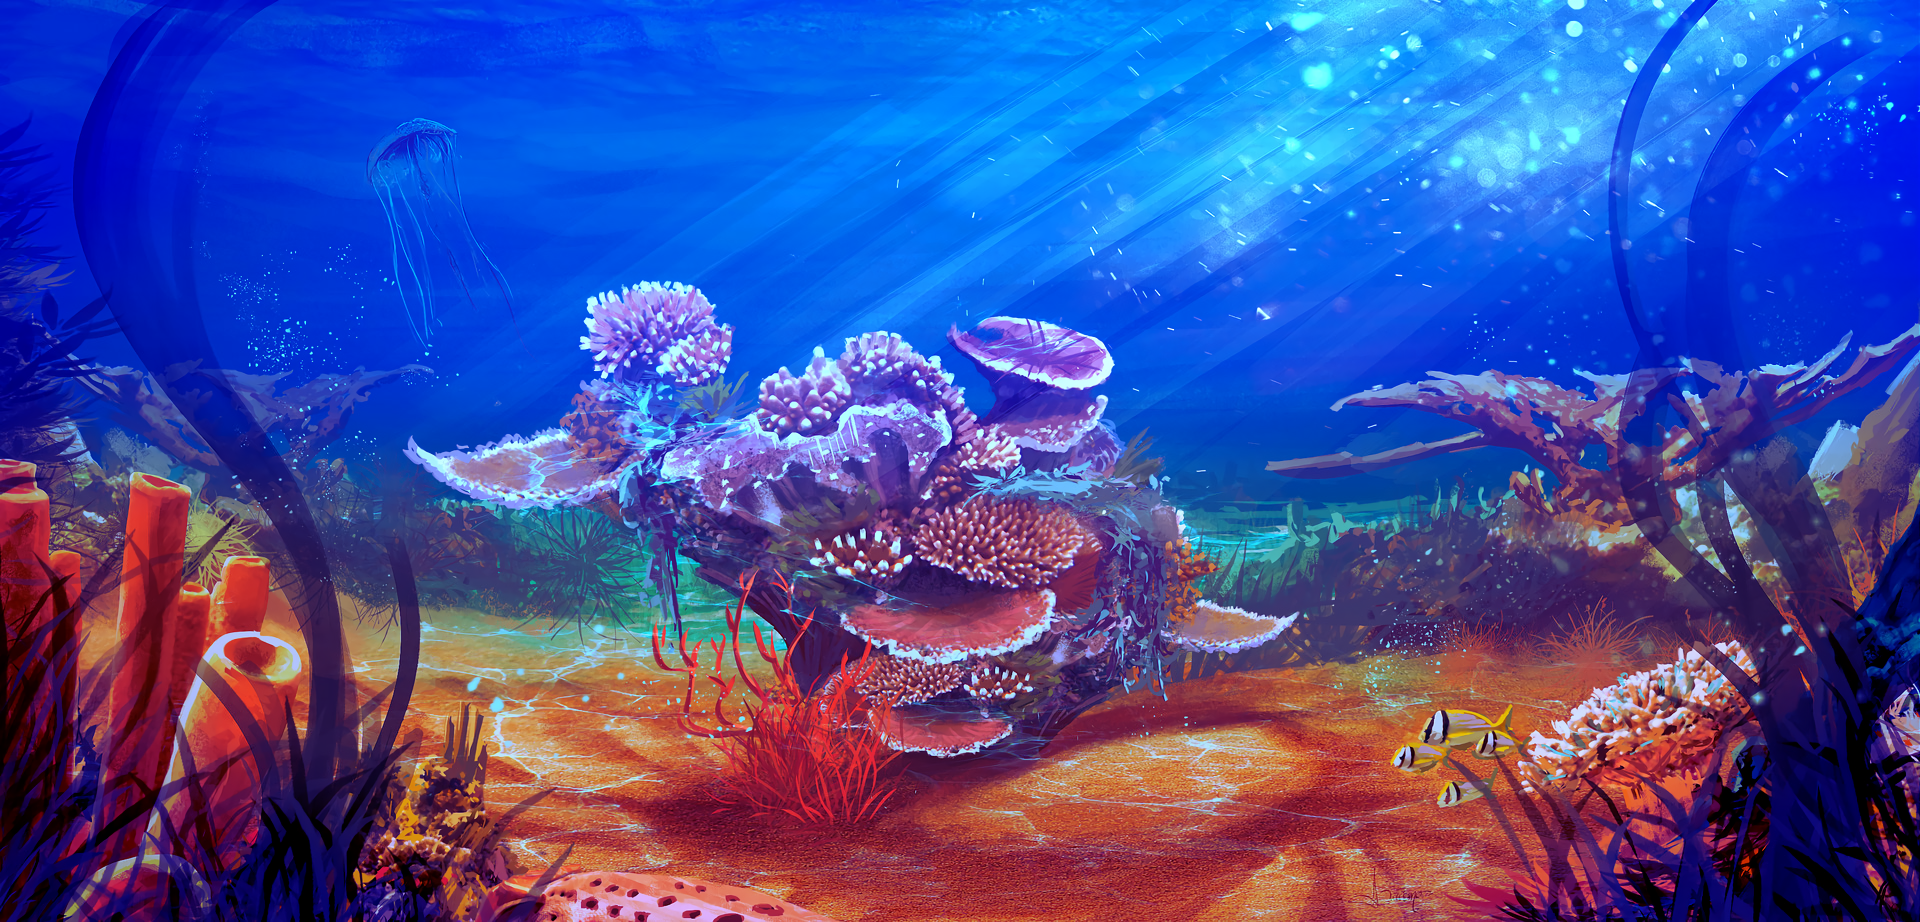 Coral Sea Underwater Artwork Digital Art Illustration Luciano Neves 1920x922